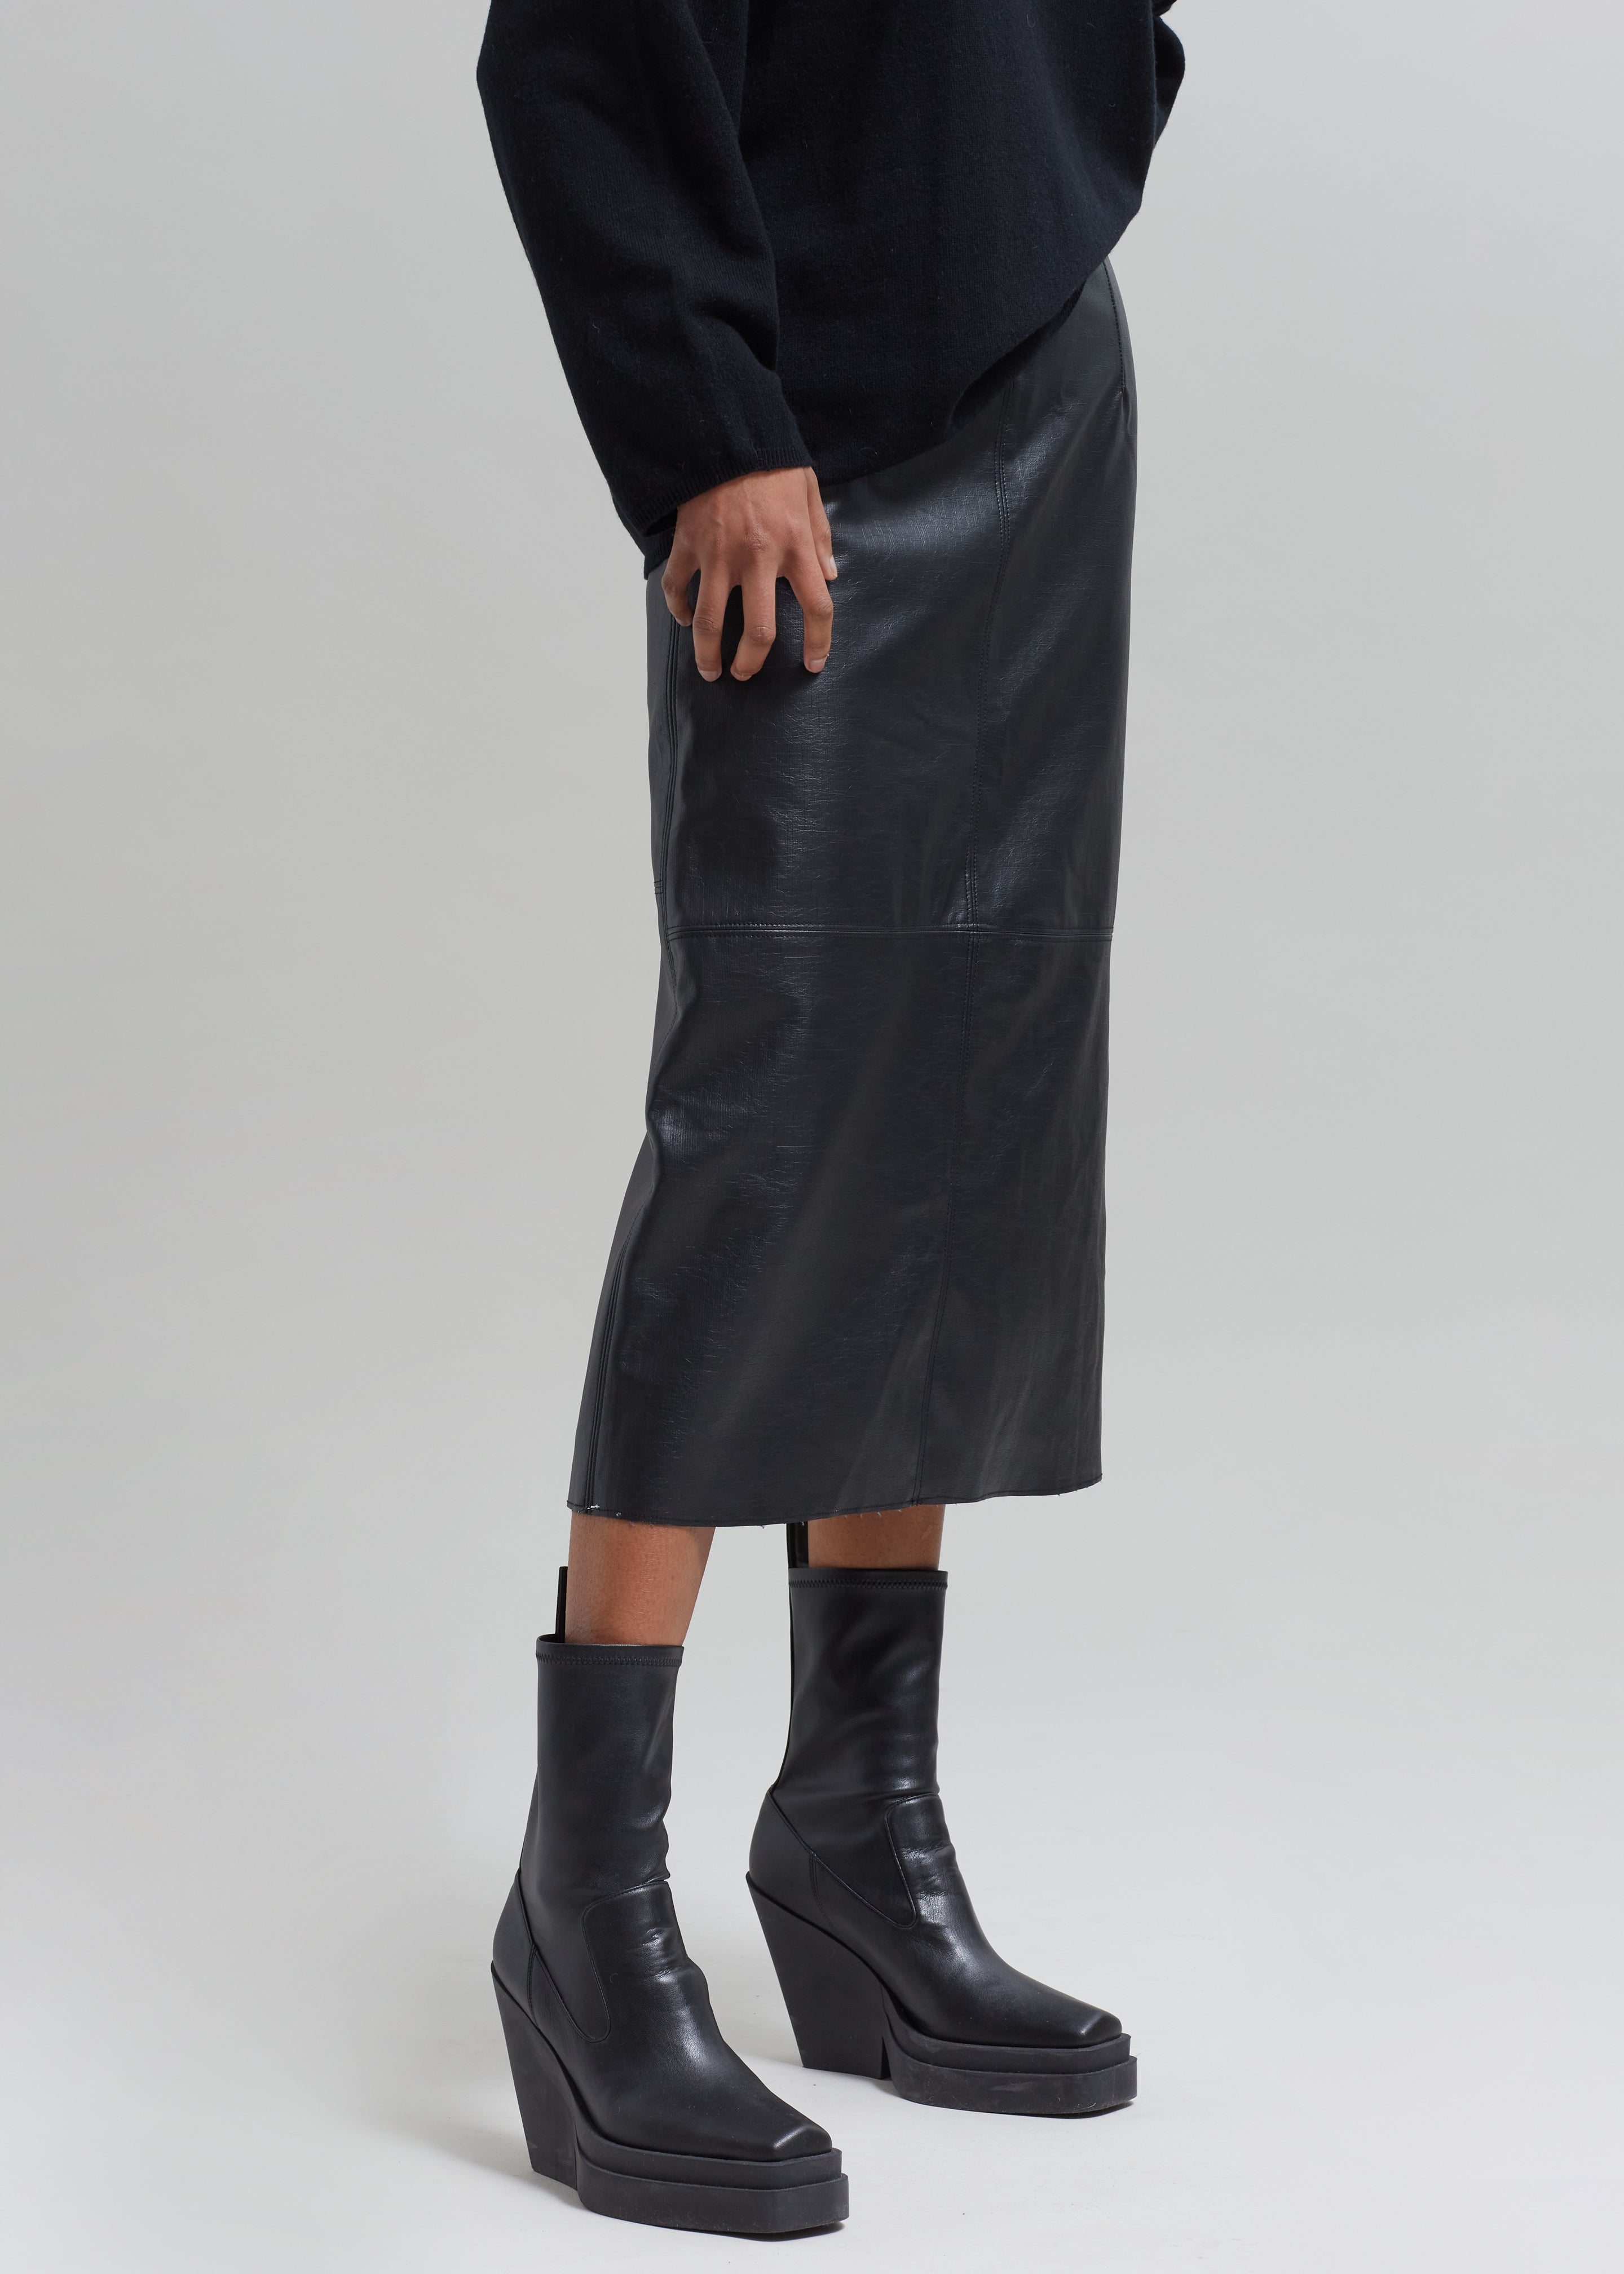 Manyne Faux Leather Pencil Skirt - Black - 6